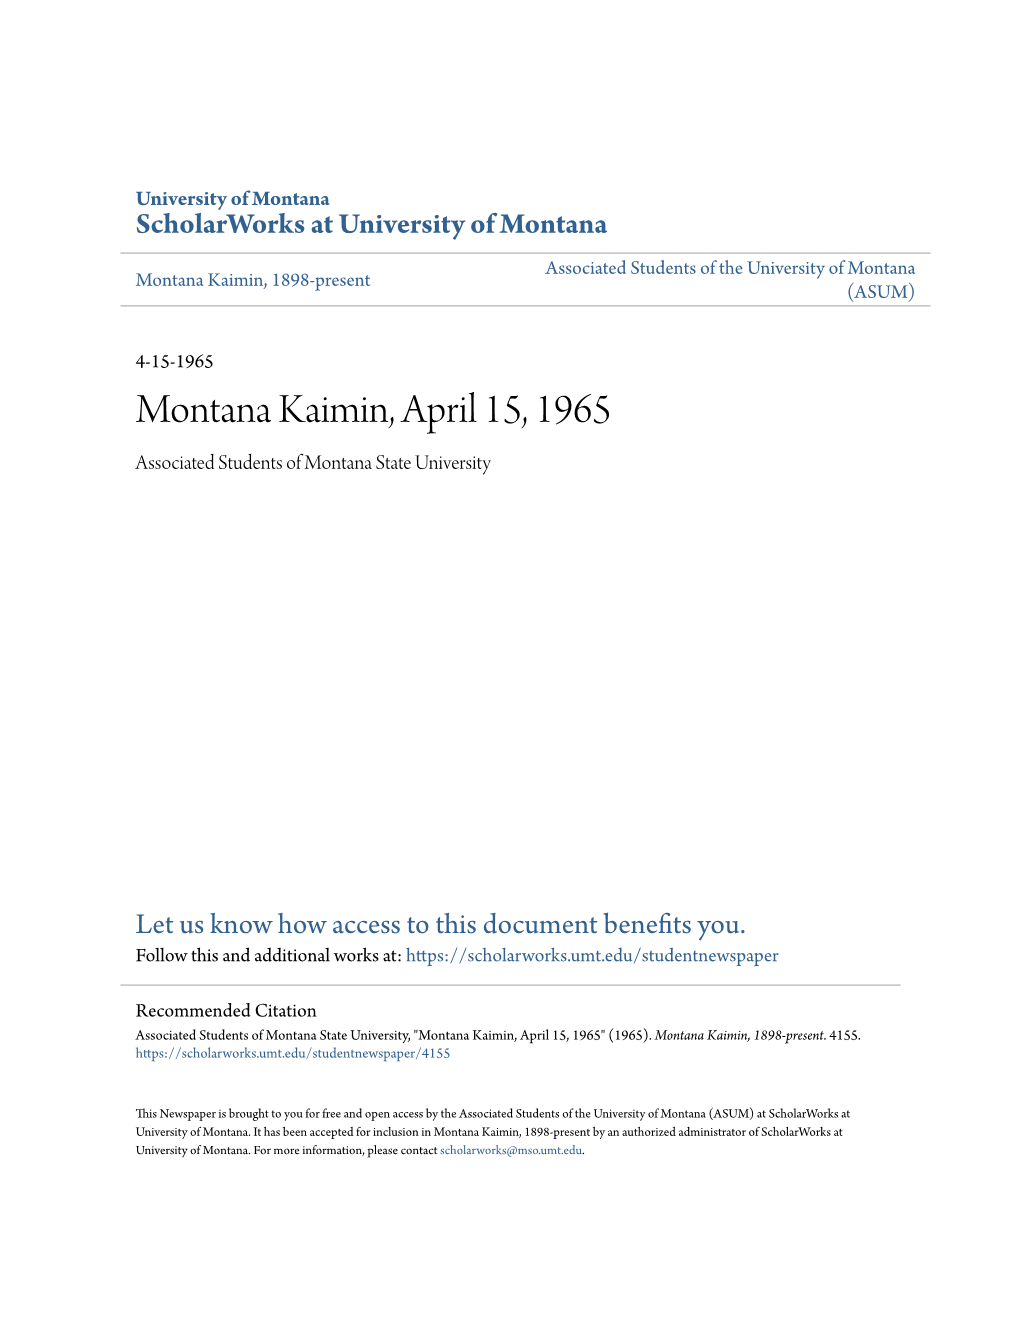 Montana Kaimin, April 15, 1965 Associated Students of Montana State University